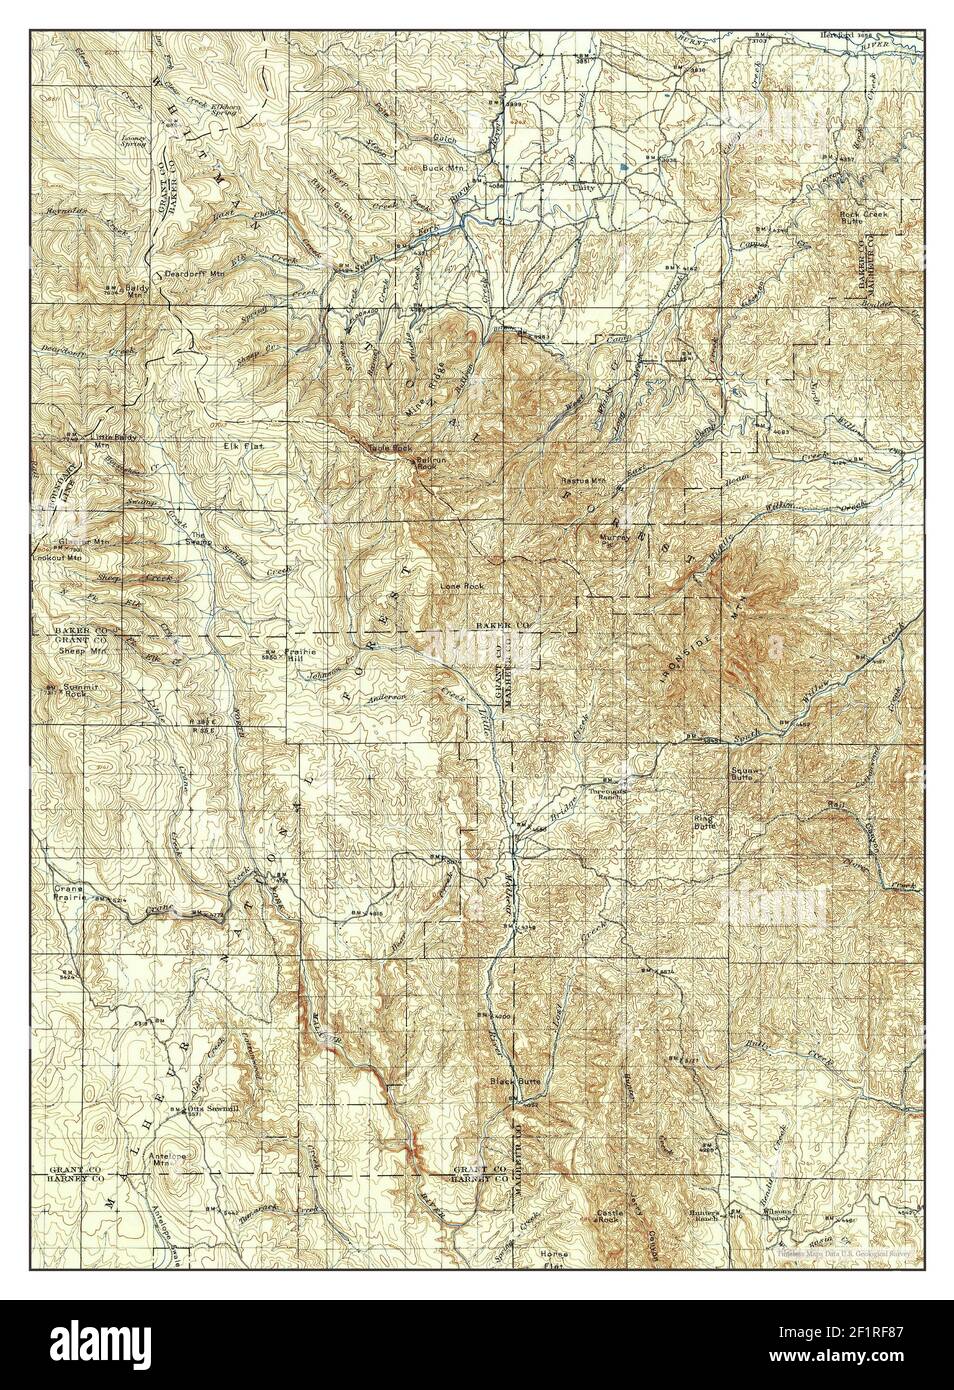 Ironside Mountain, Oregon, map 1908, 1:125000, United States of America by Timeless Maps, data U.S. Geological Survey Stock Photo